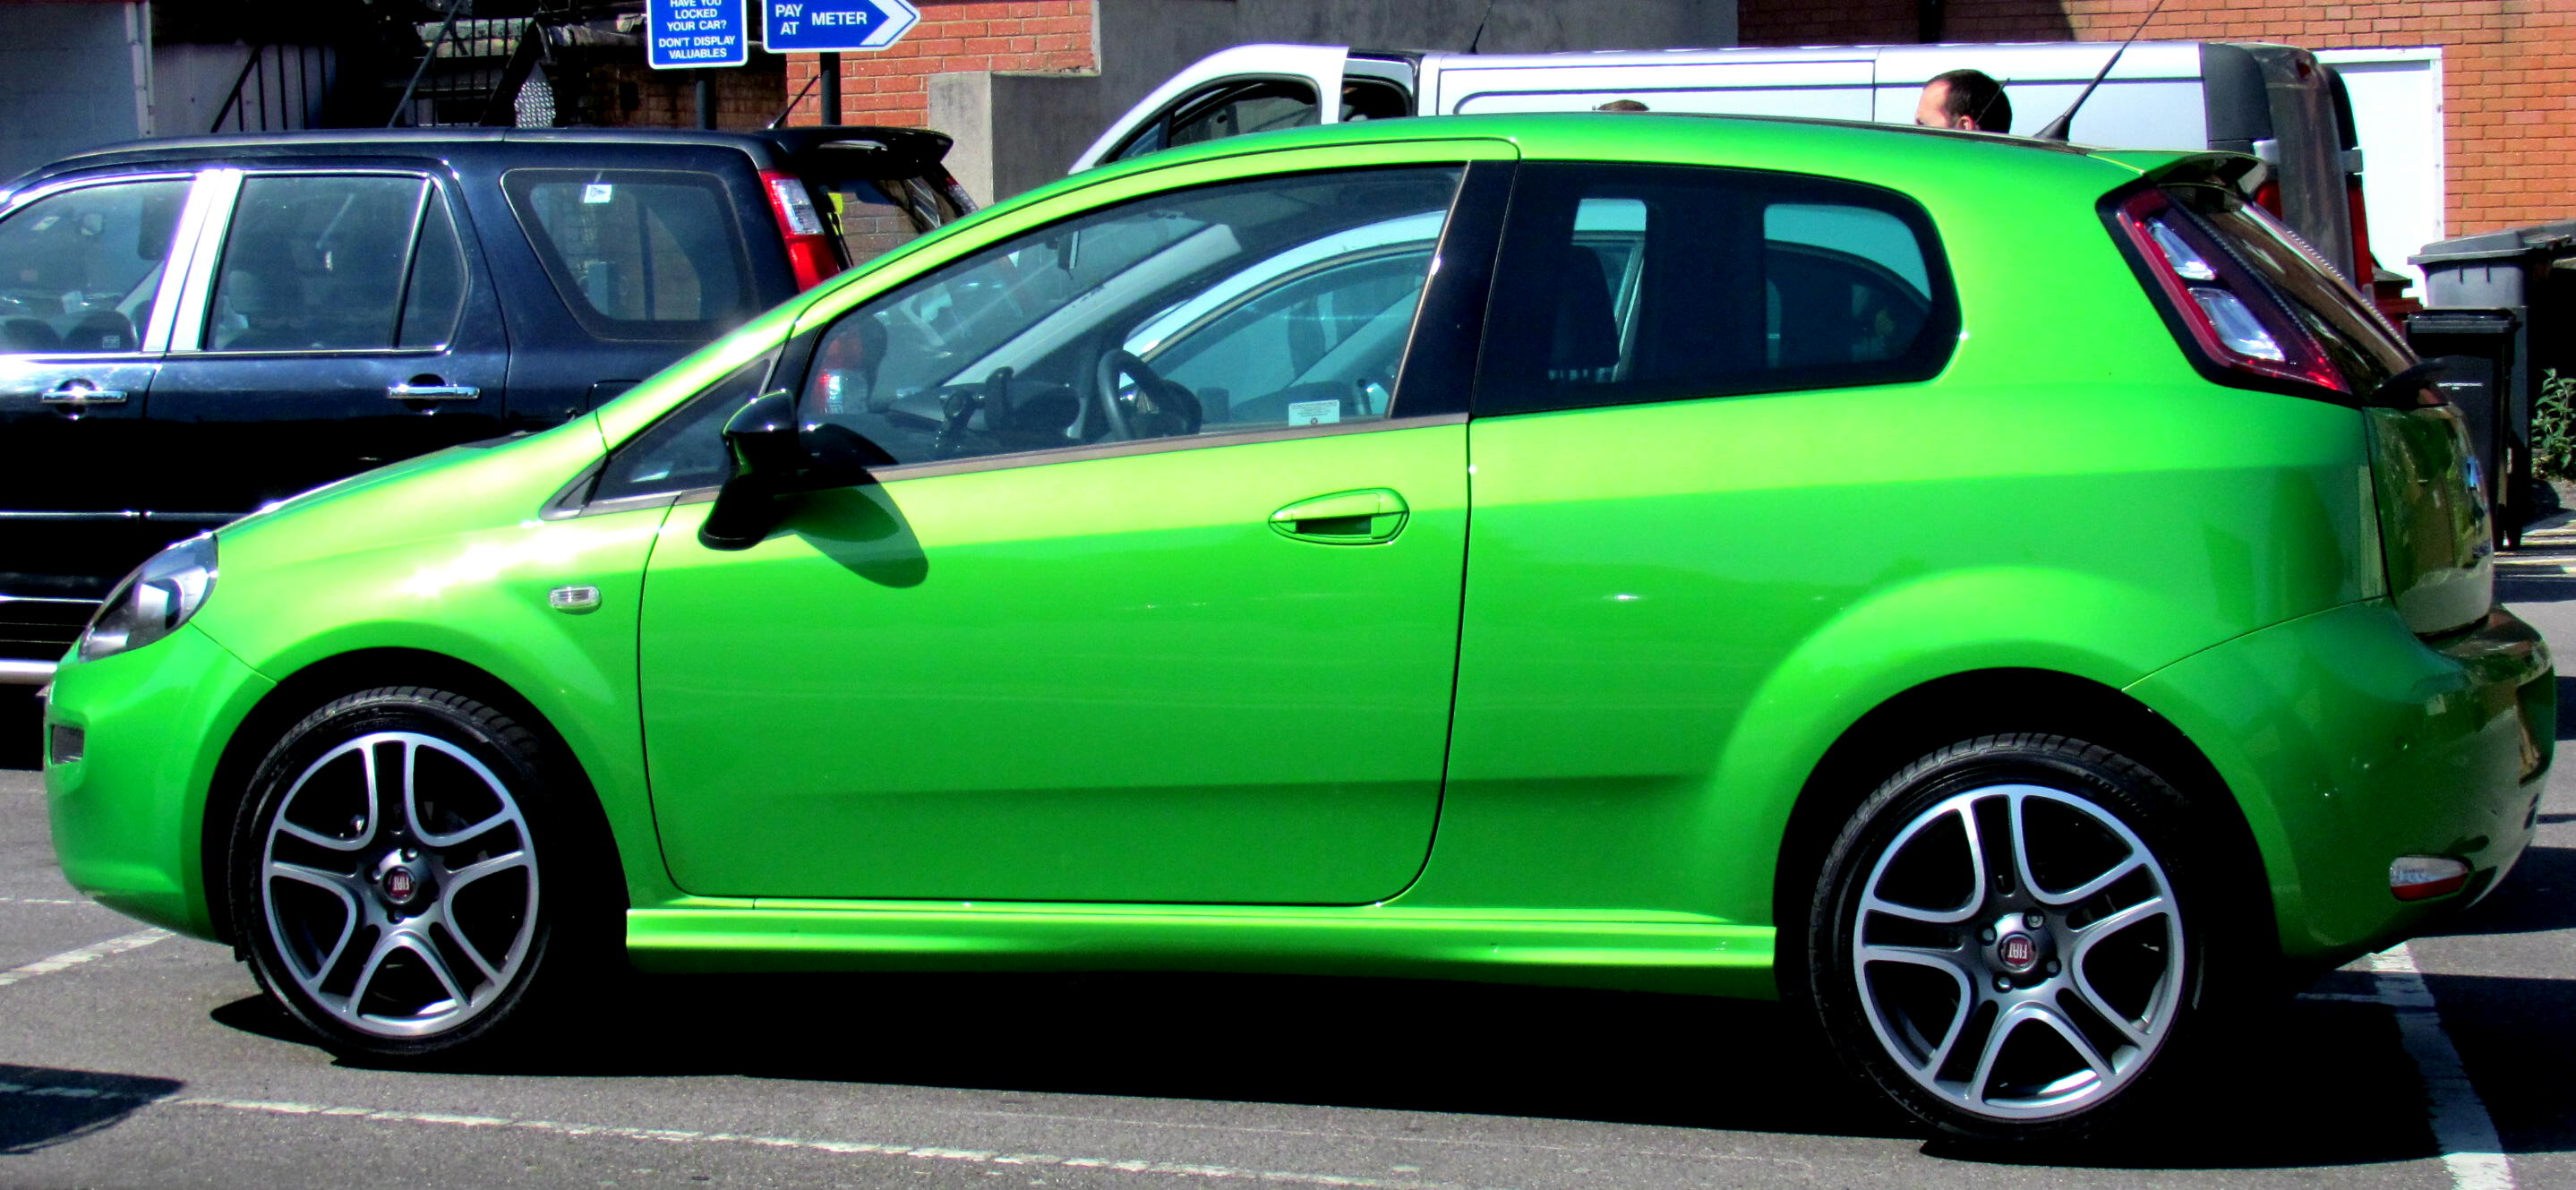 File:Green Car (8868996967).jpg - Wikimedia Commons